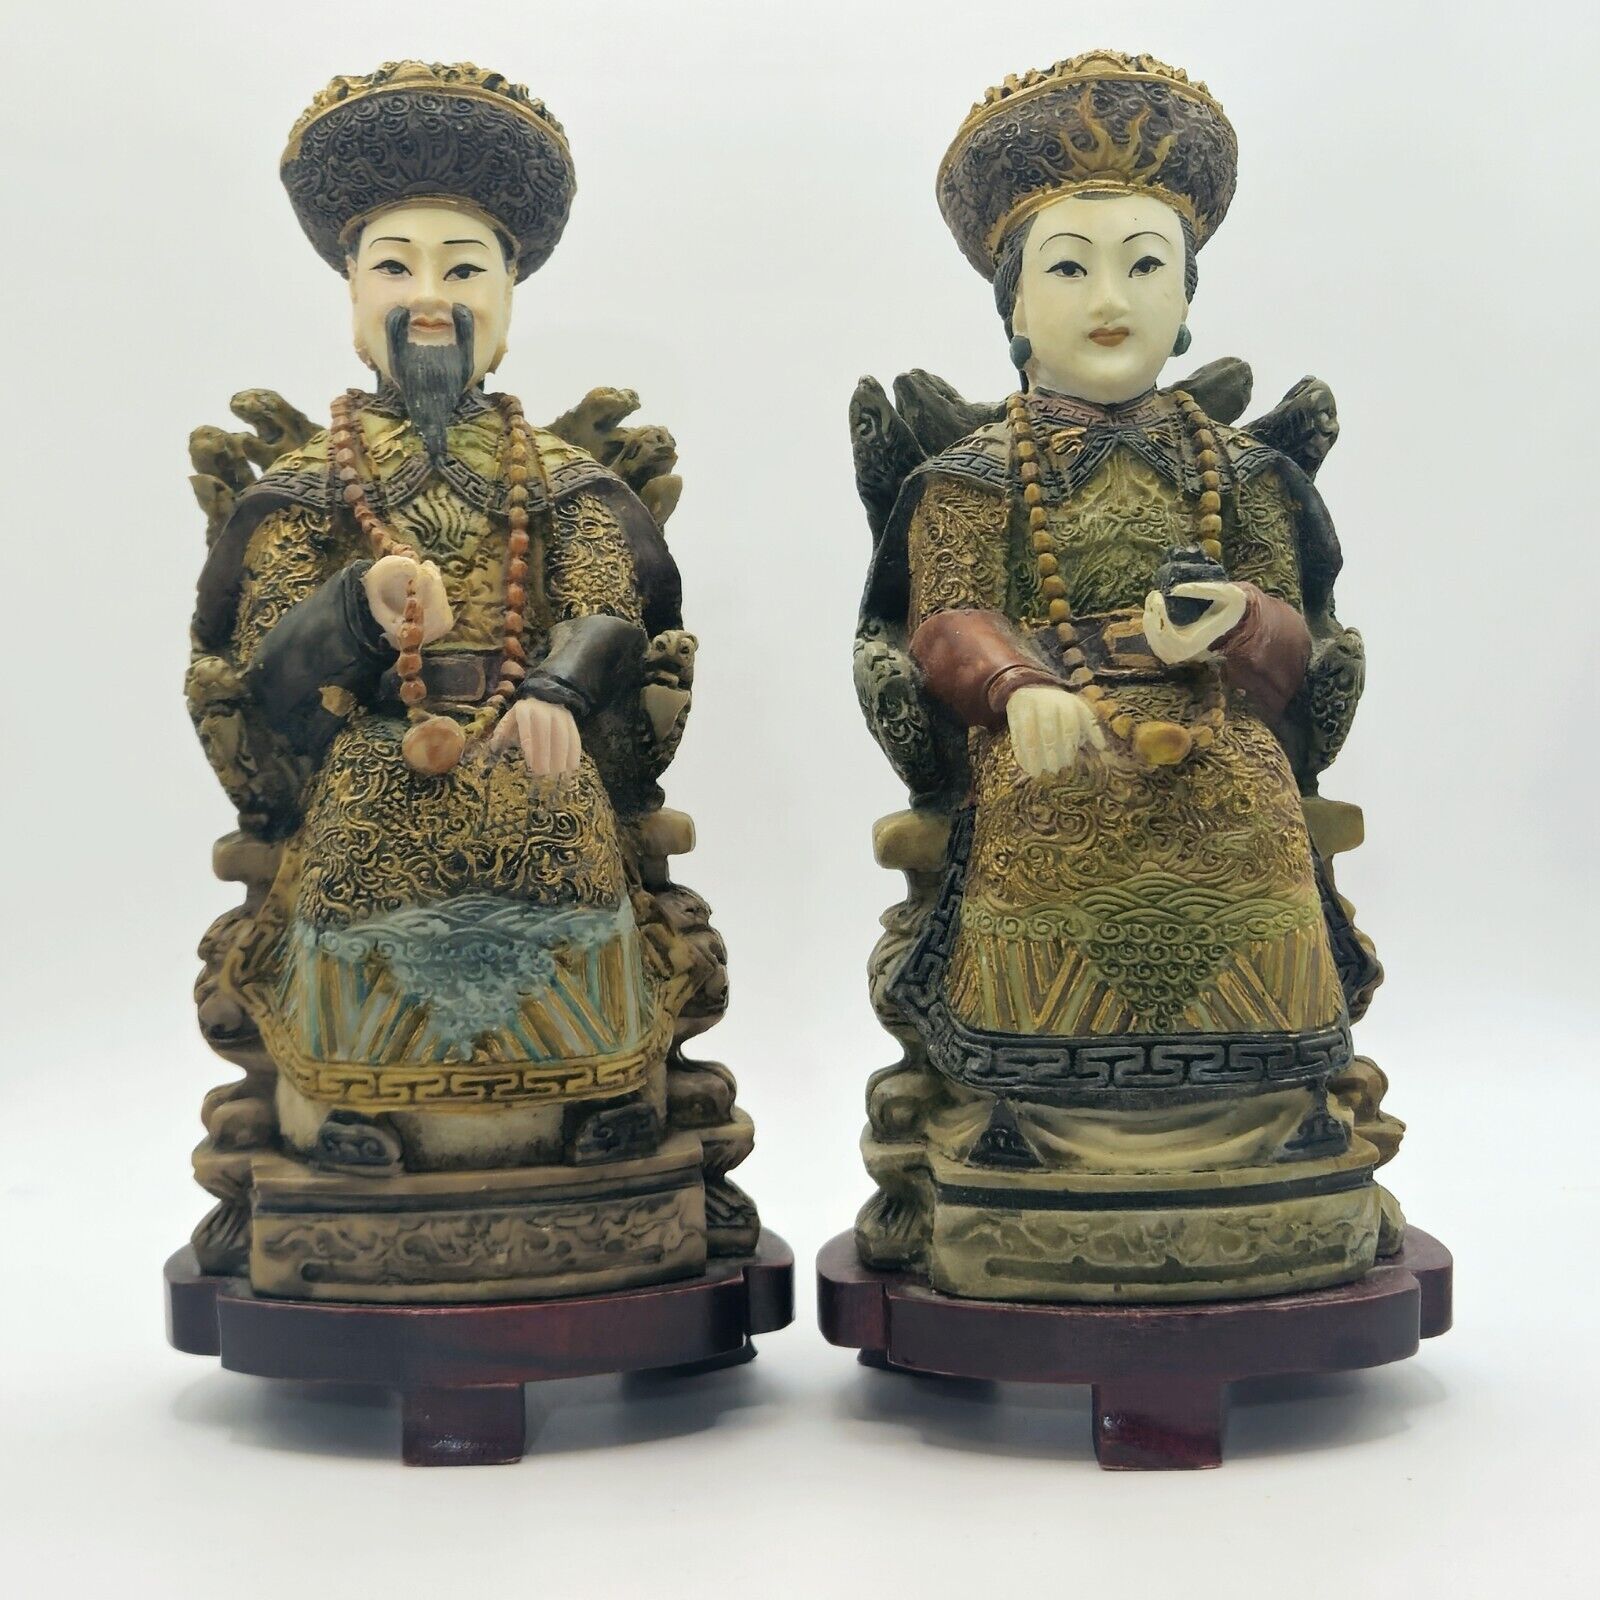 Vintage Chinese EMPEROR & EMPRESS resin figurines